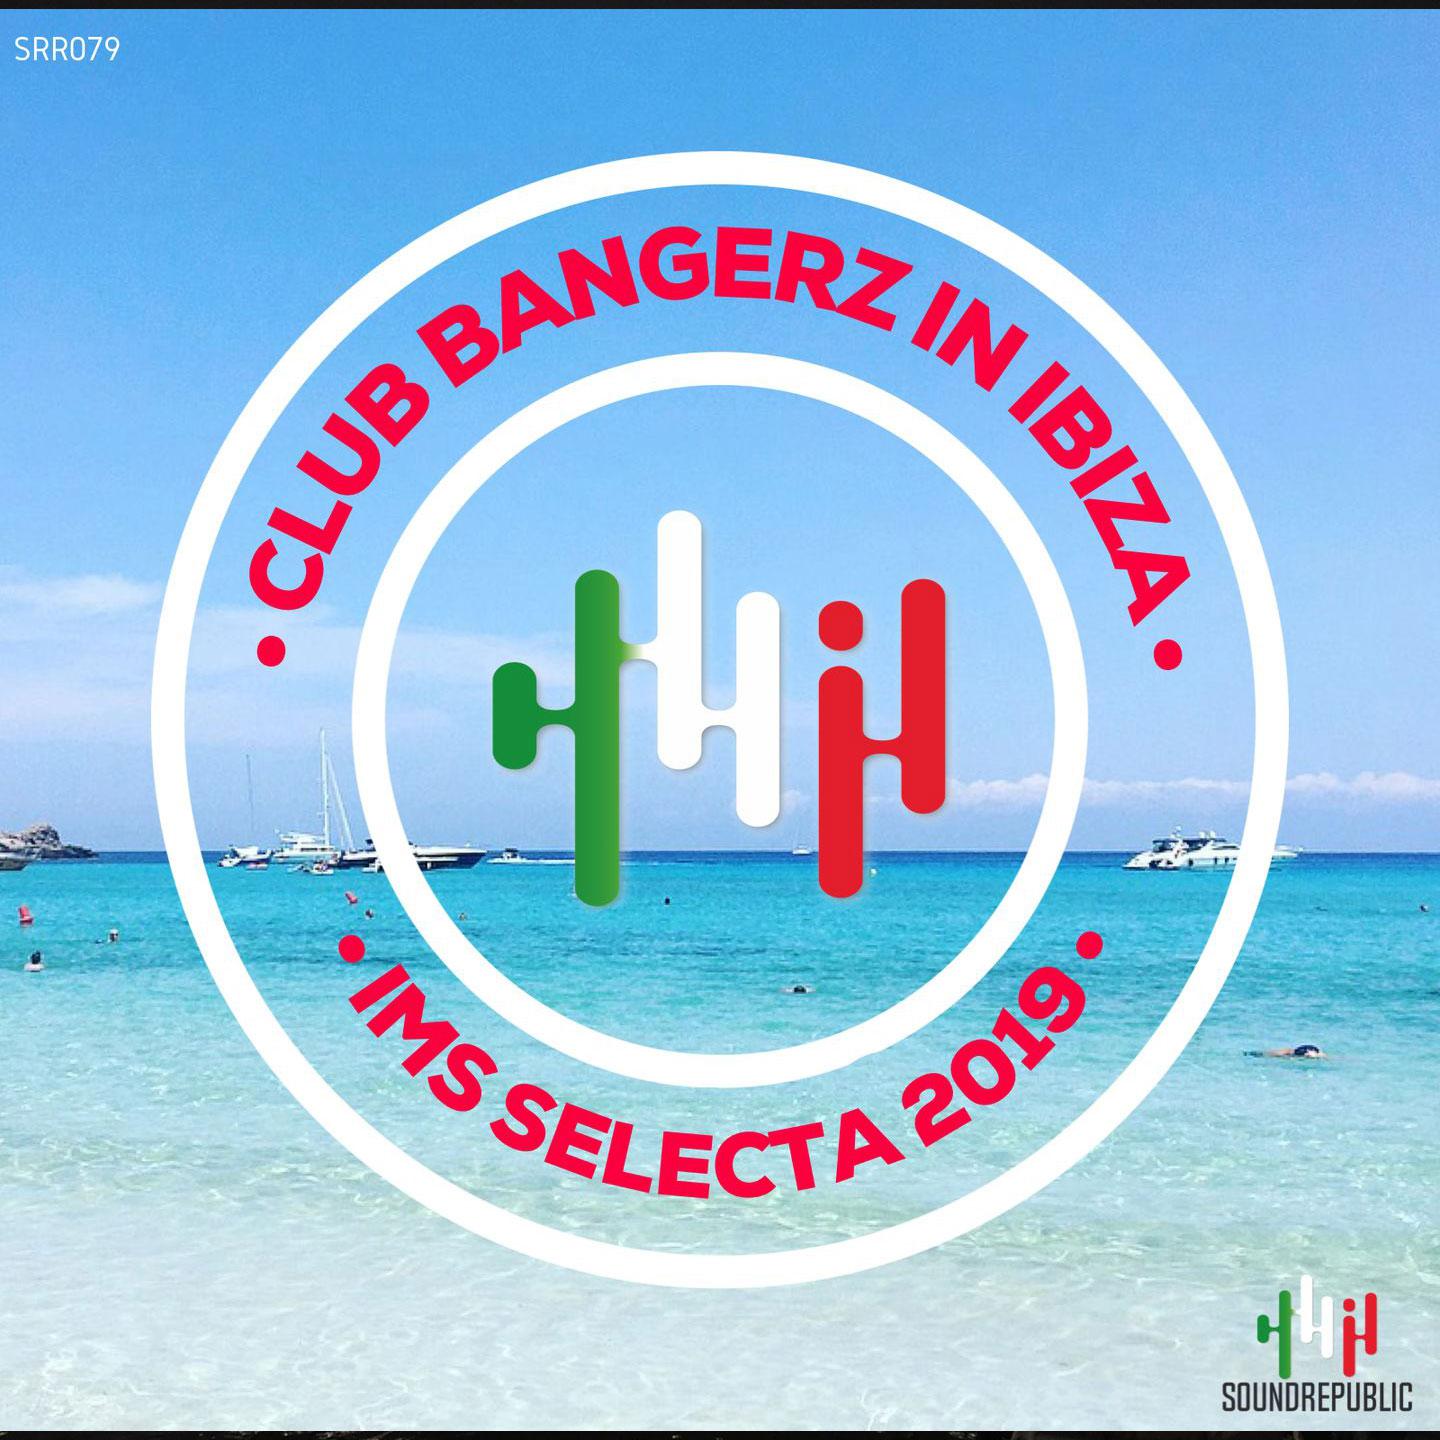 Club Bangerz in Ibiza (Ims Selecta 2019)